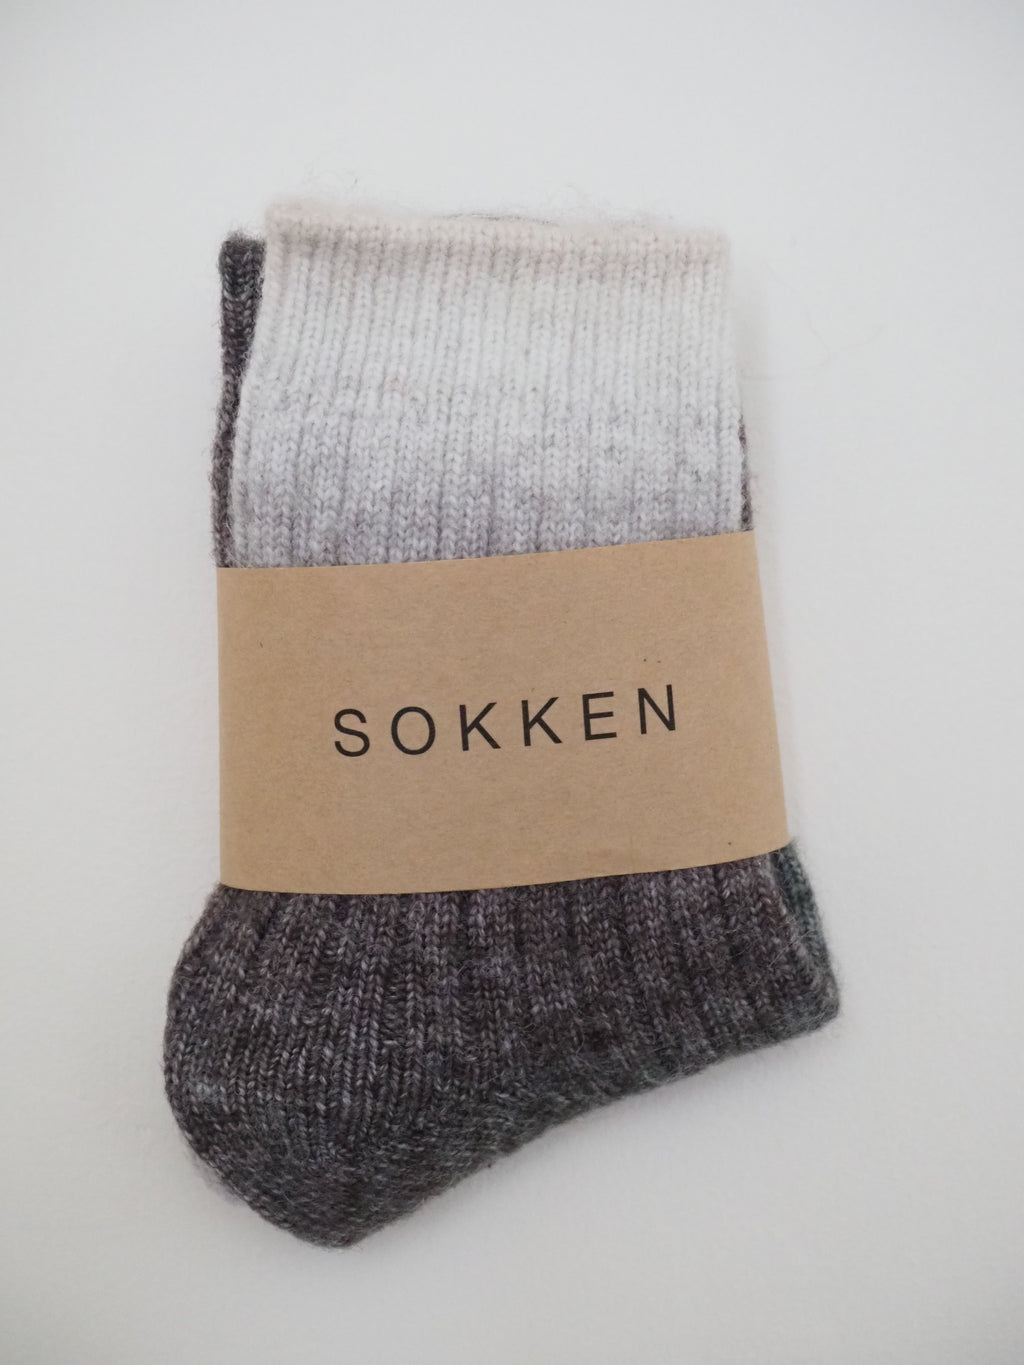 S O K K E N Gather socks